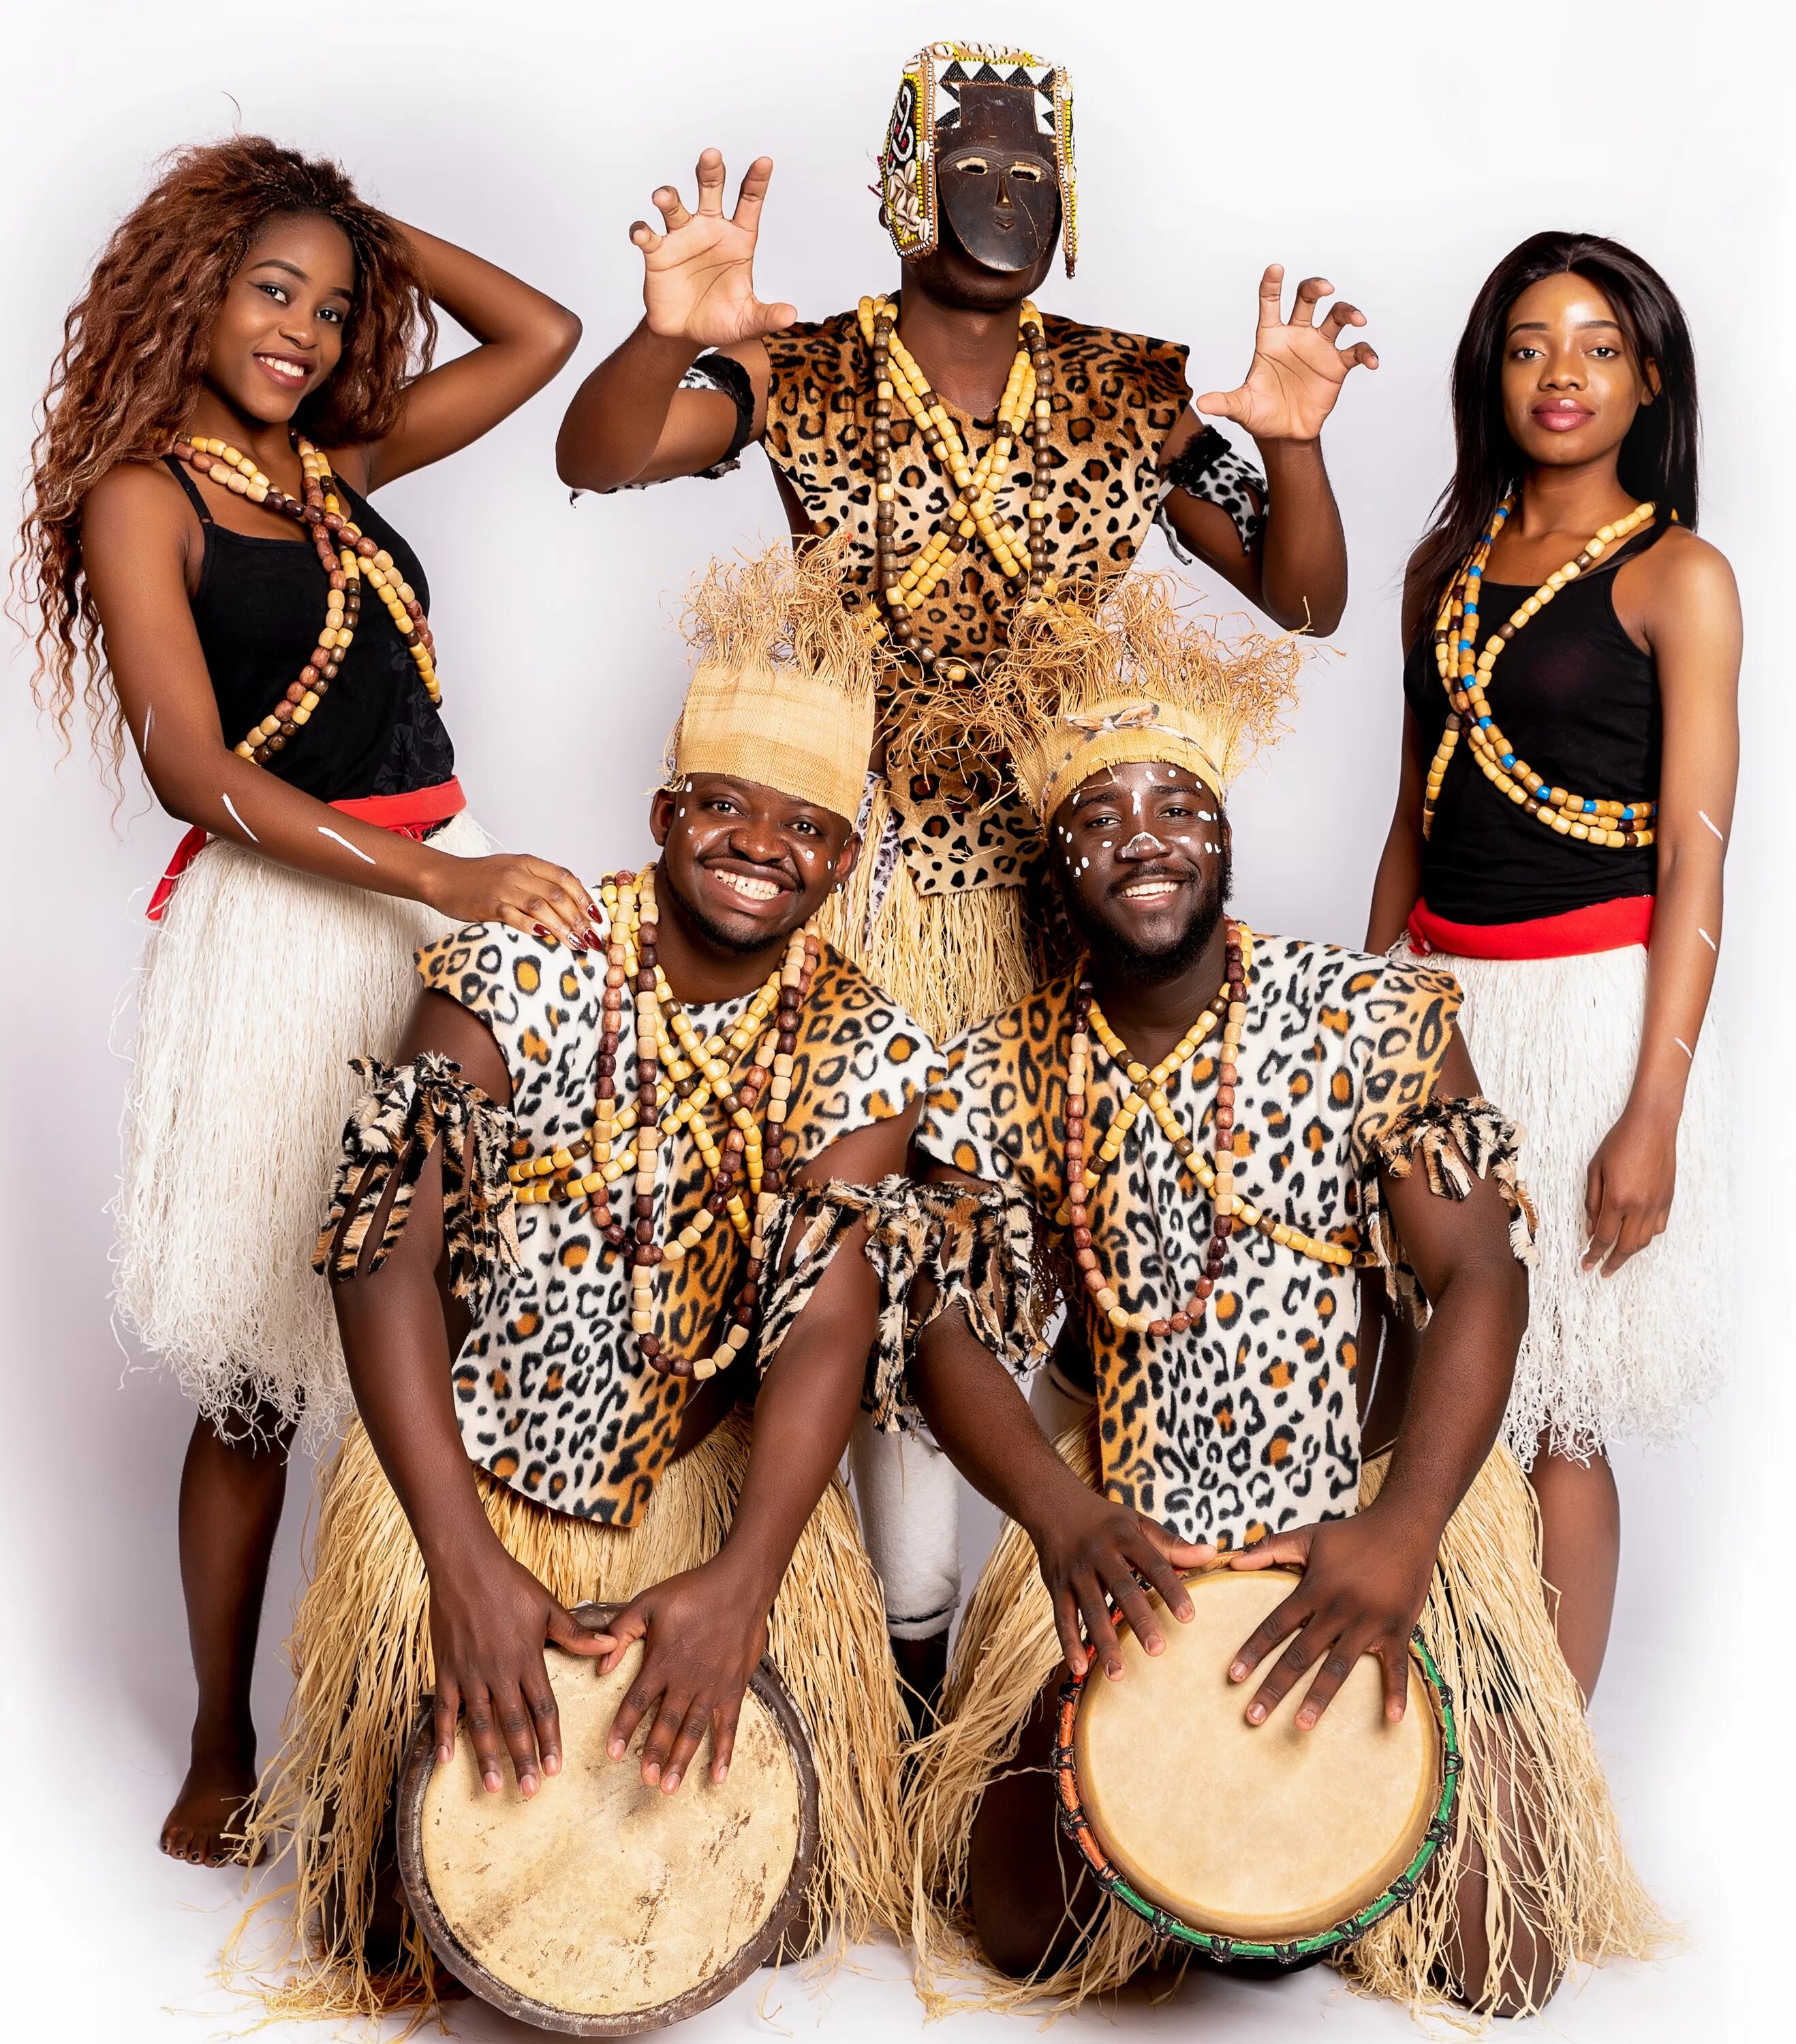 Waka waka africa. Африканское шоу Waka-Waka. Африканский костюм. Африканский ансамбль. Шоу африканских барабанщиков.